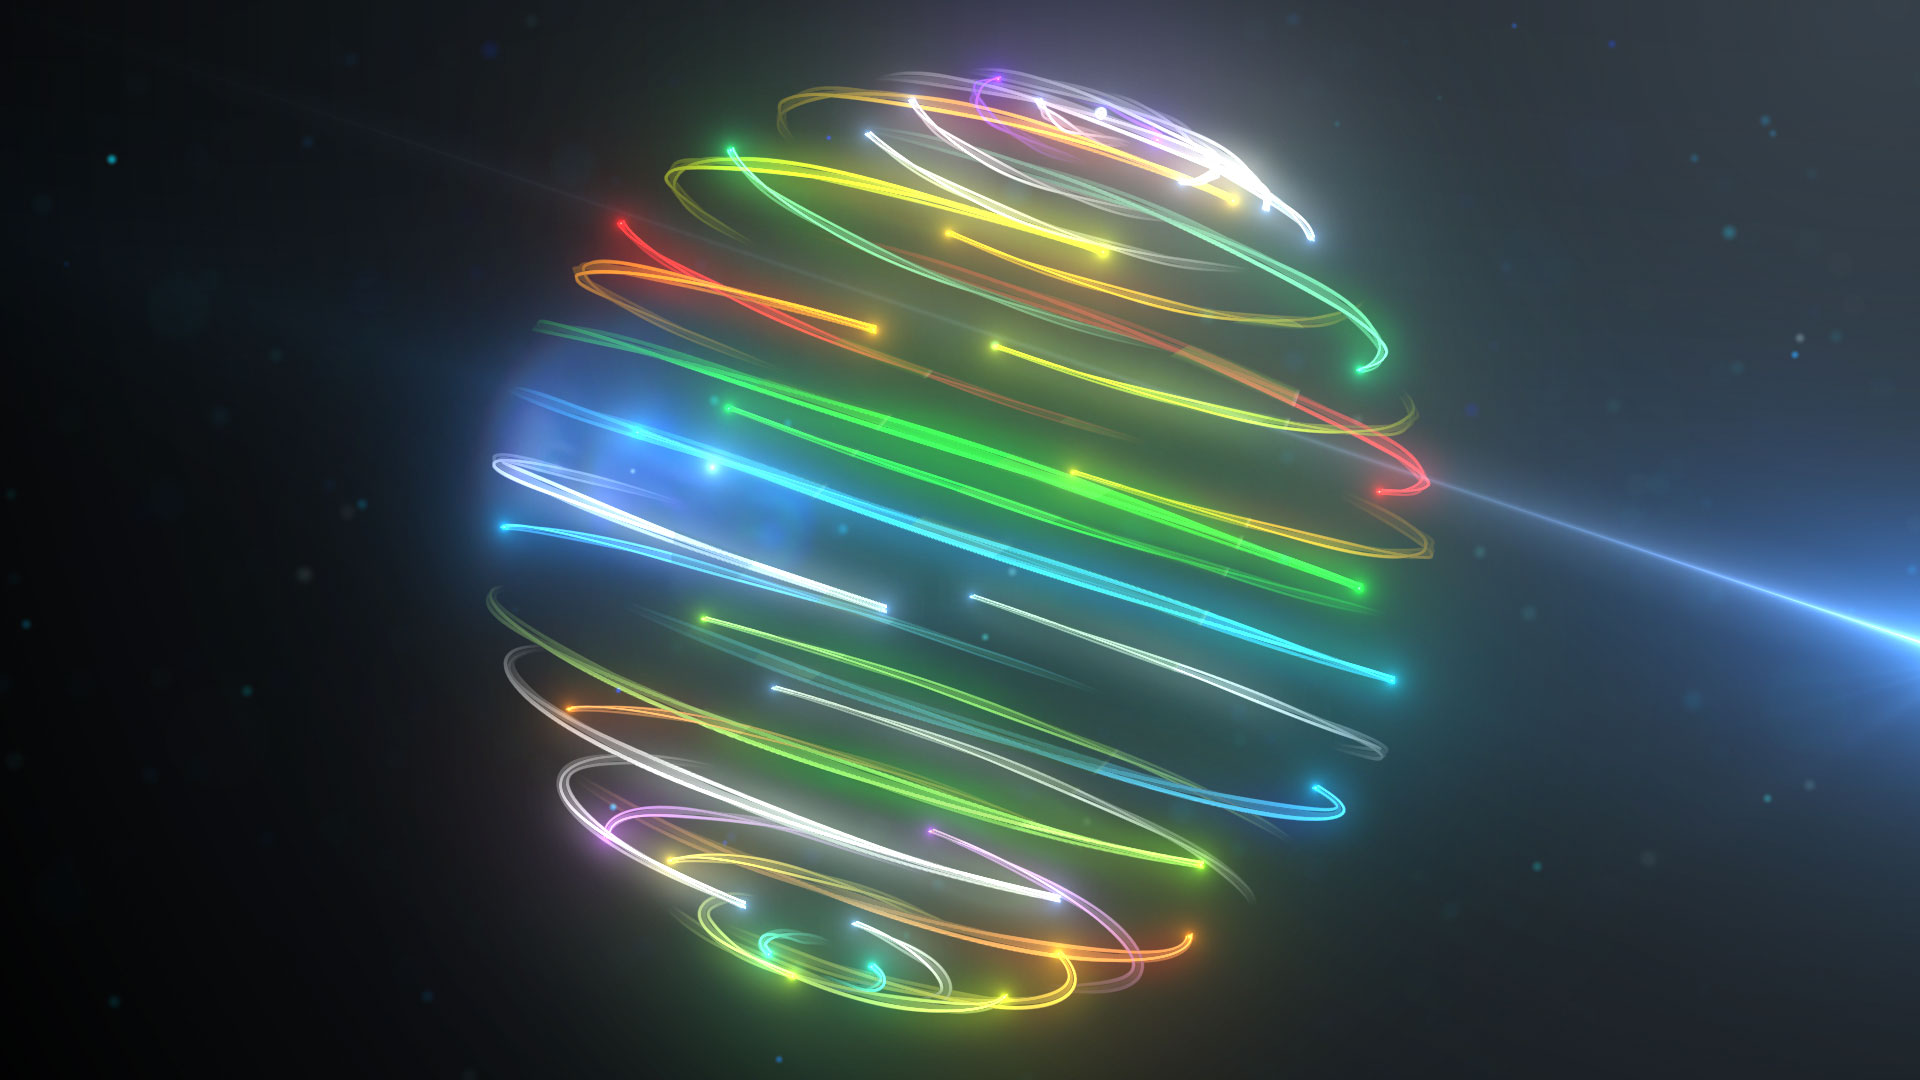 Animations-Logoanzeige der bunten Strahlen kugelförmige